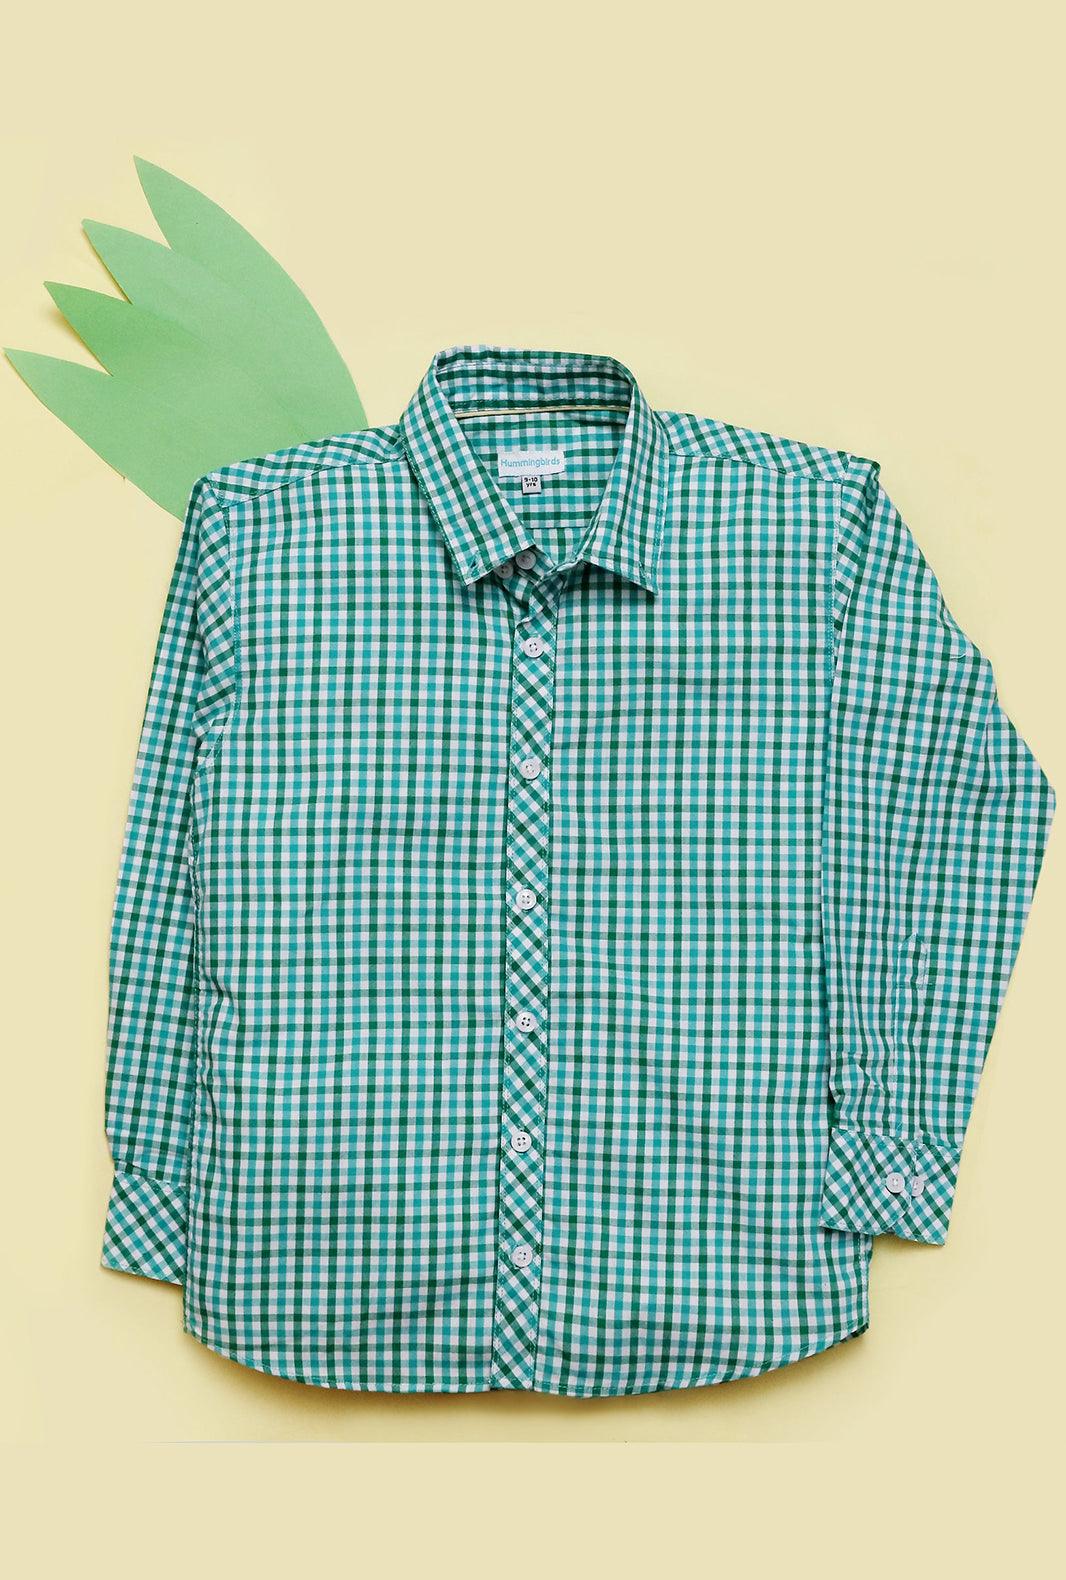 Aqua Checkered Shirt